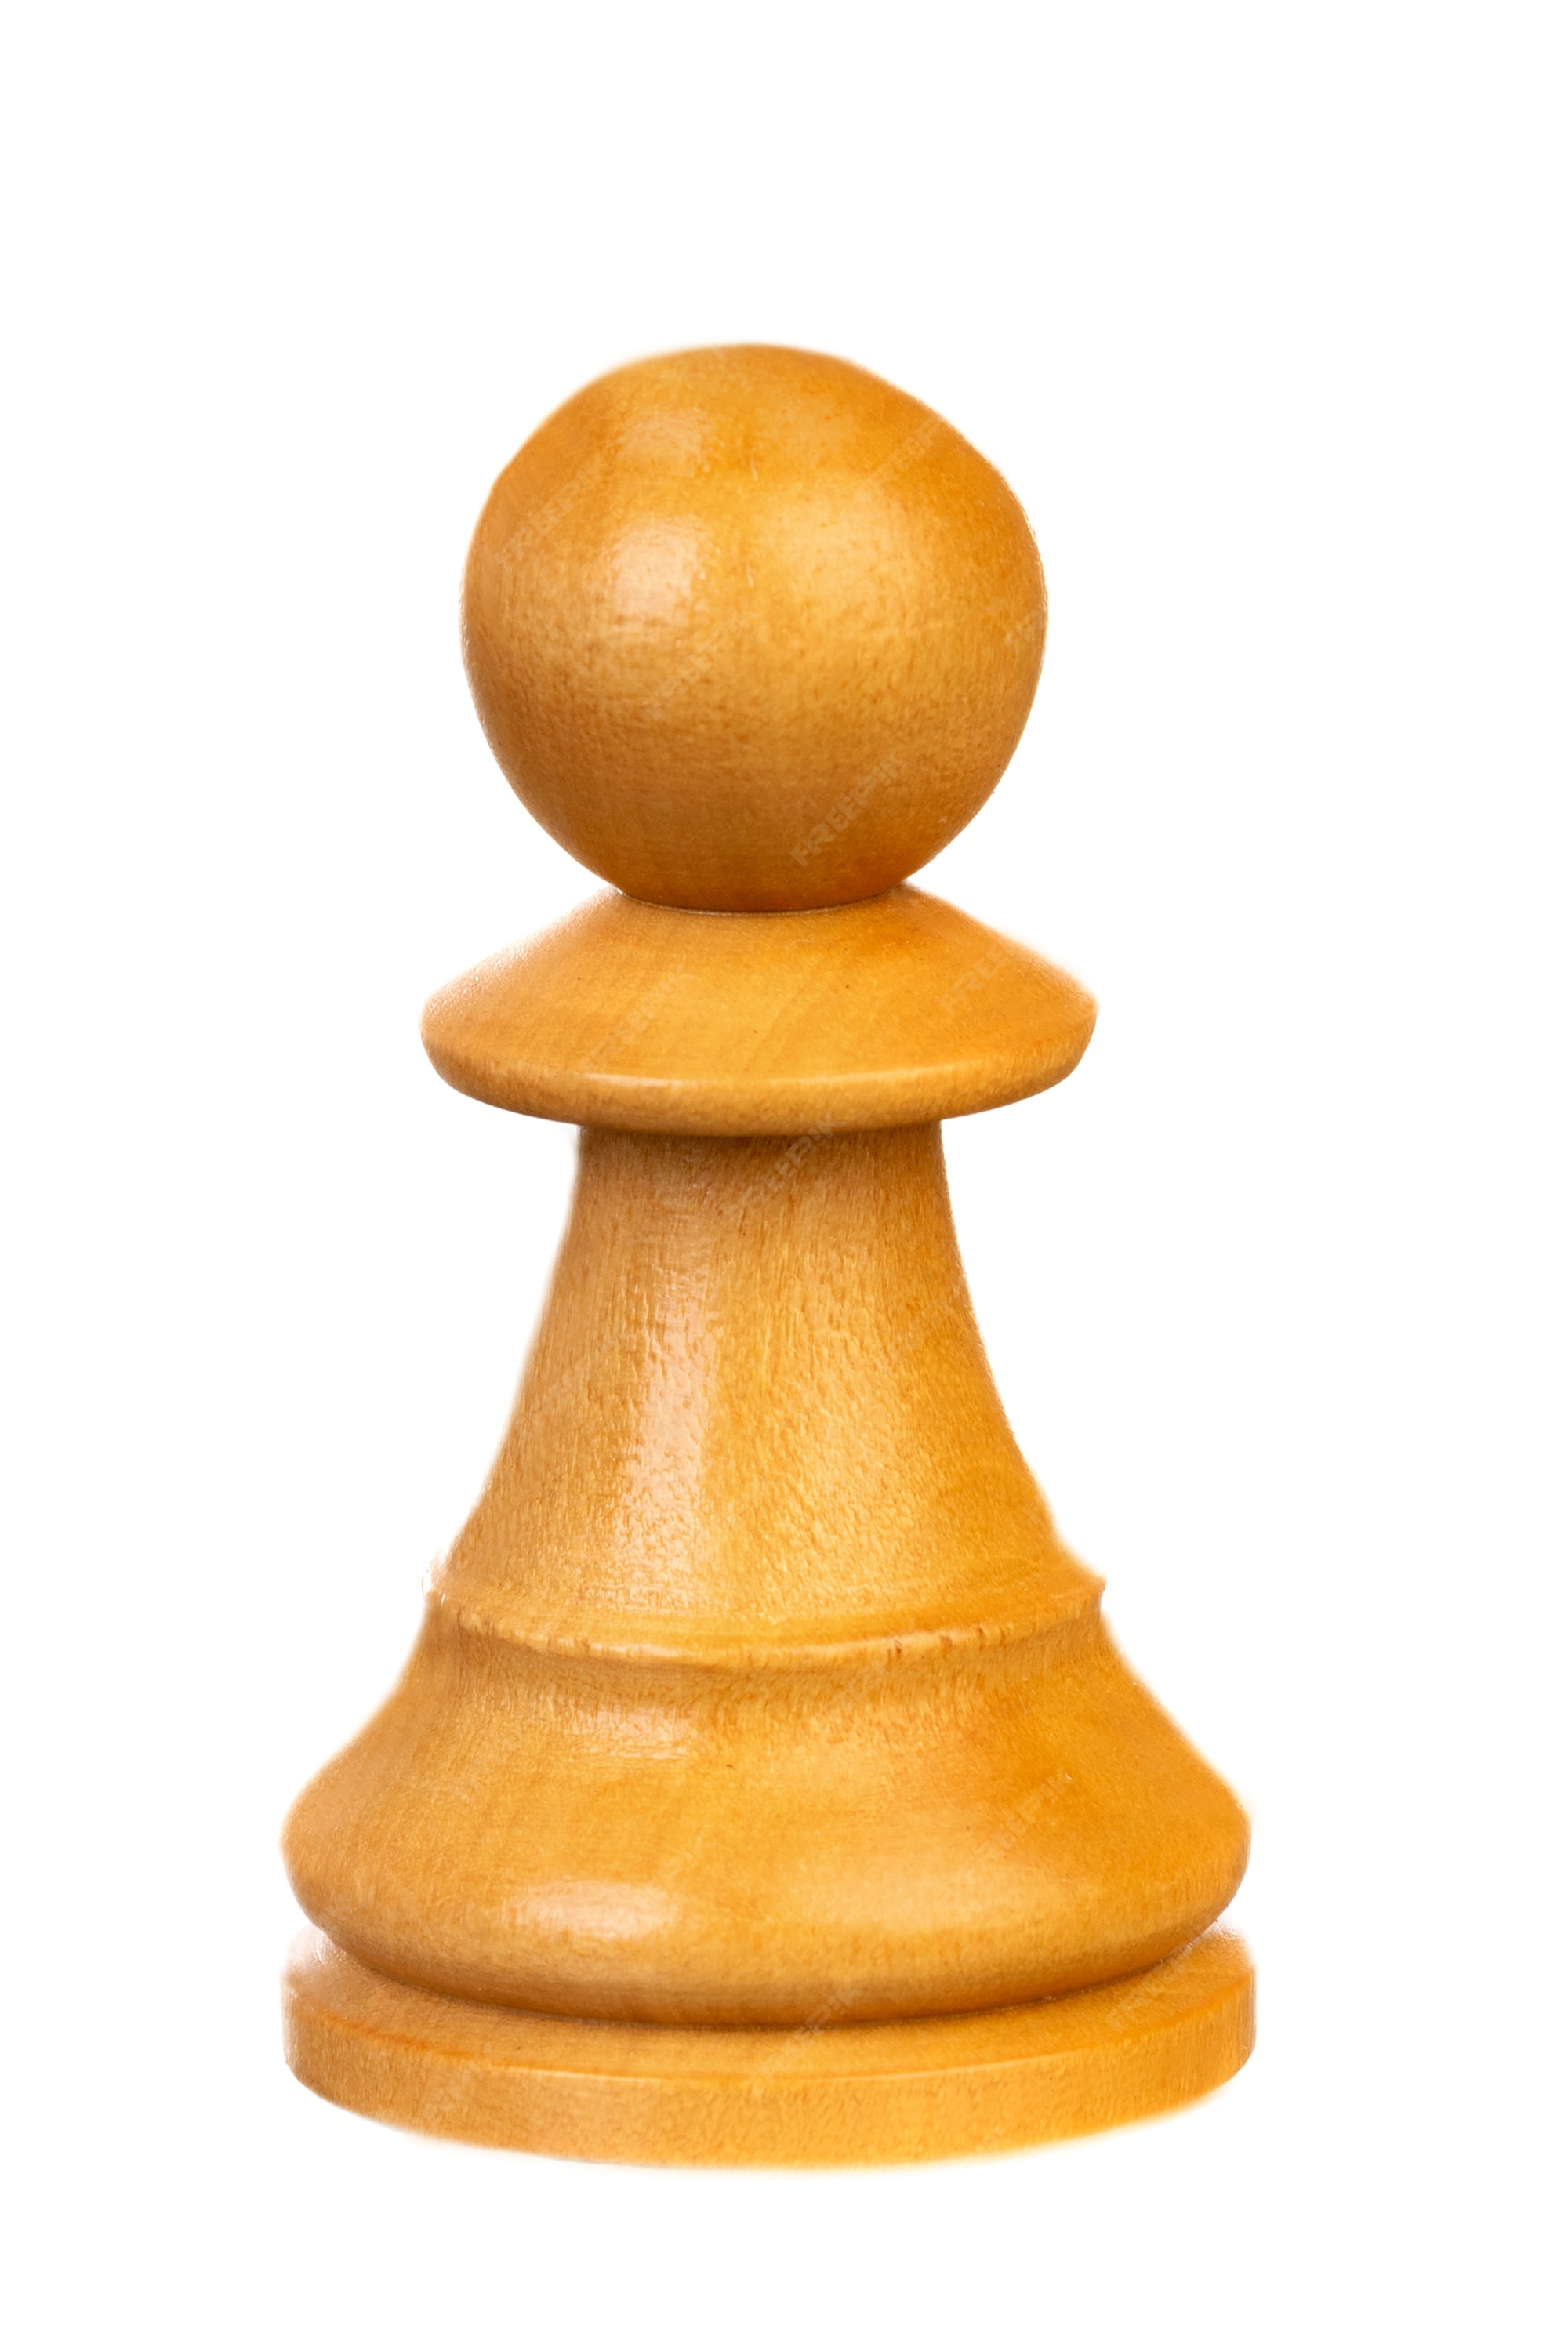 Premium Photo | The pawn, chess piece